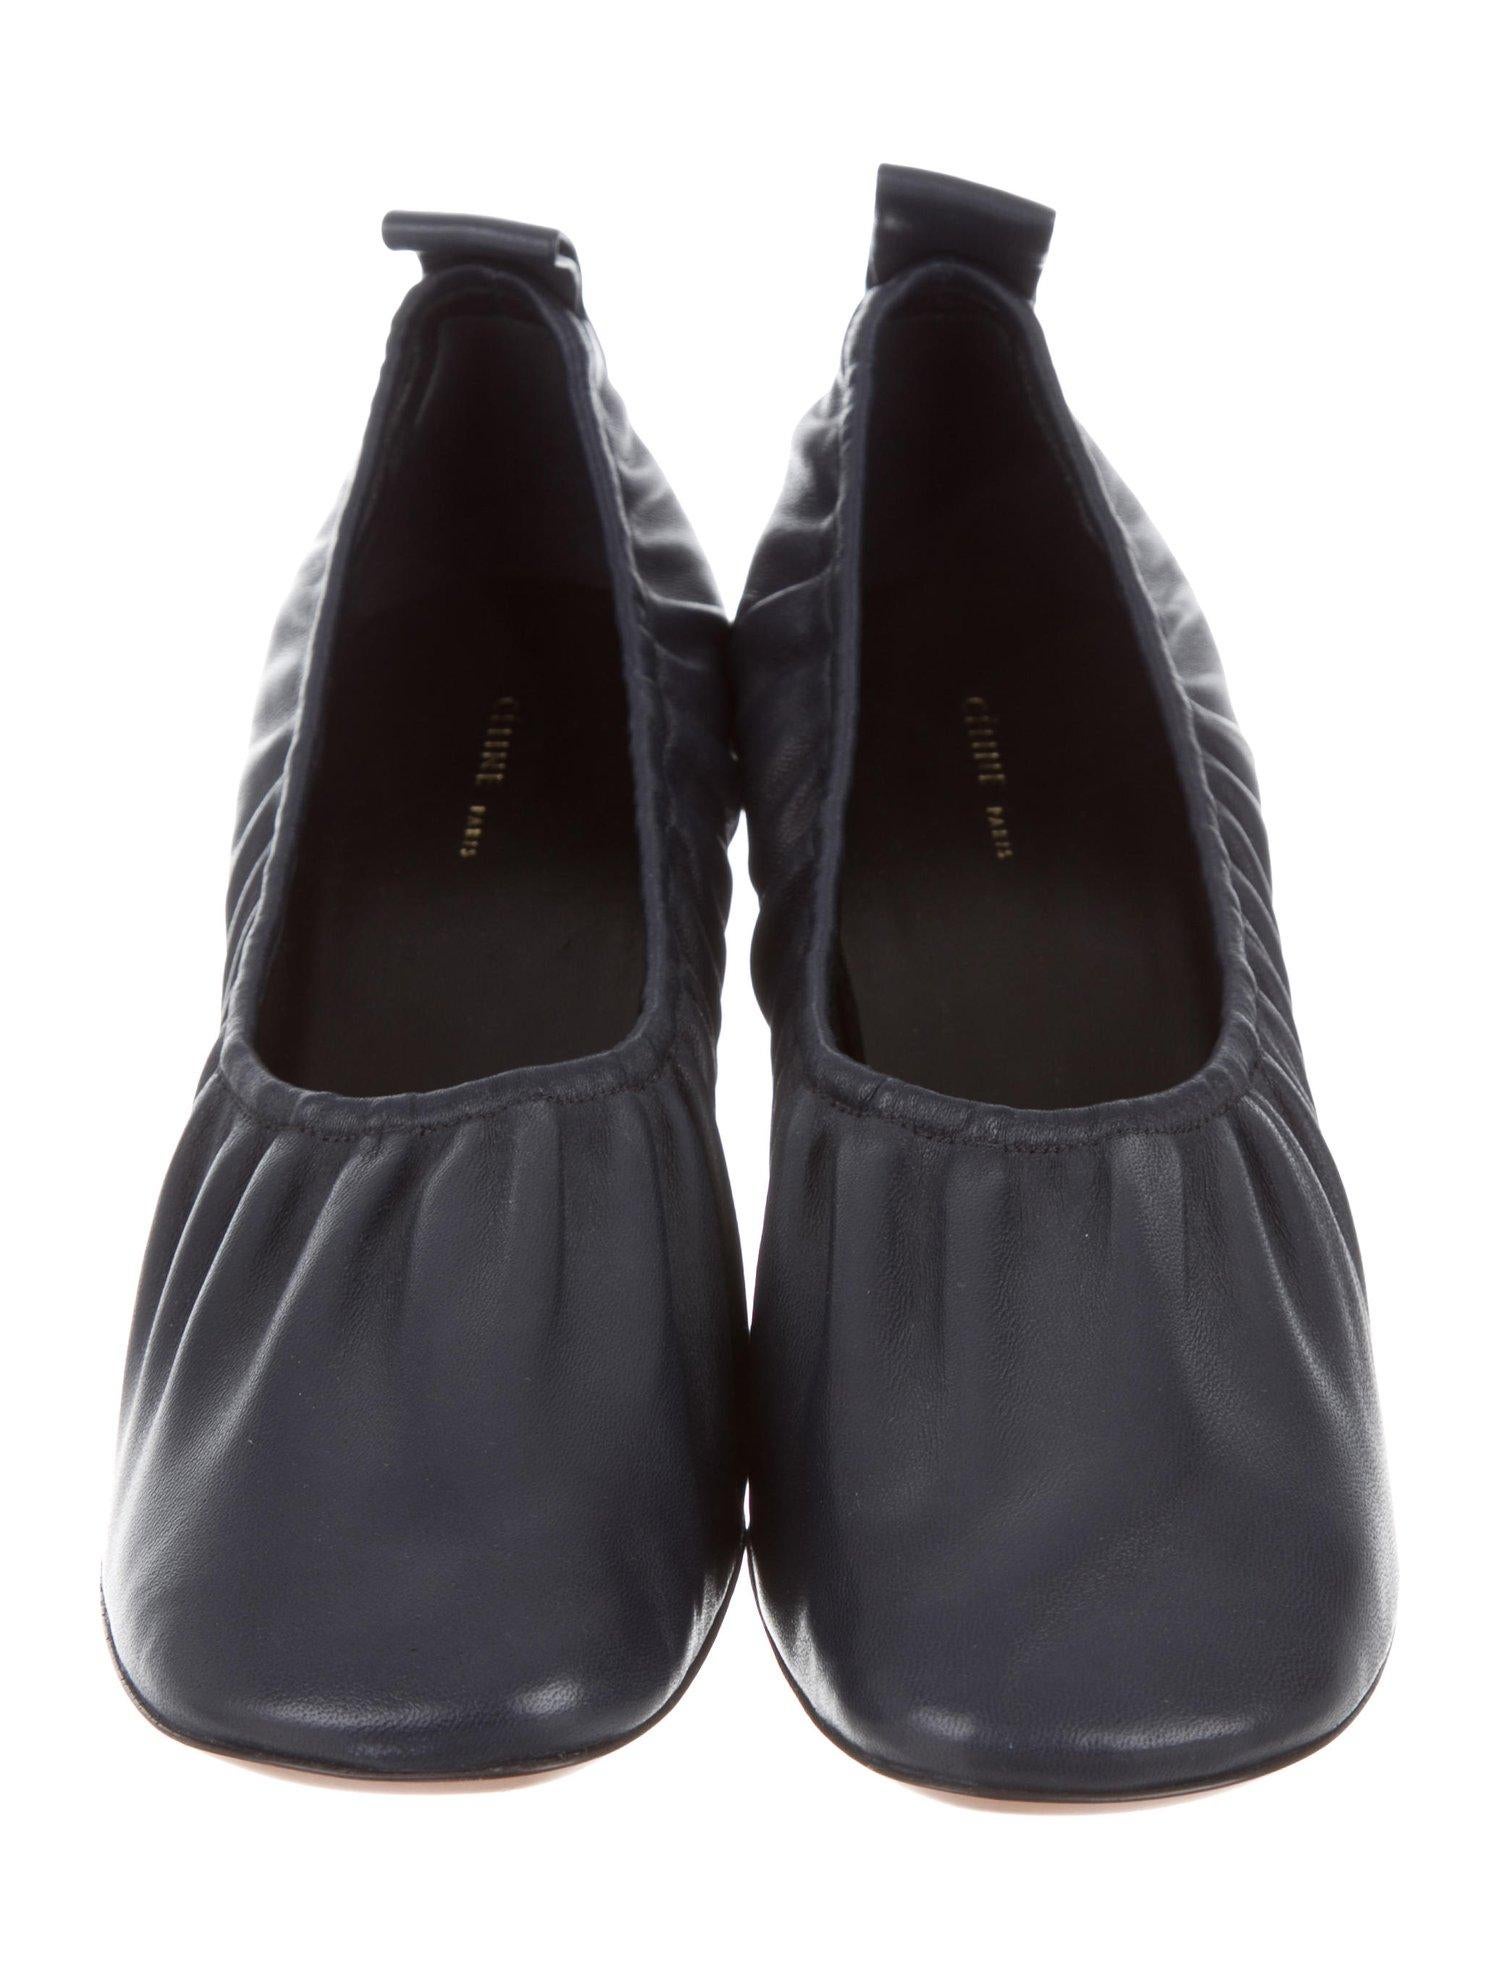 gucci phoebe heels